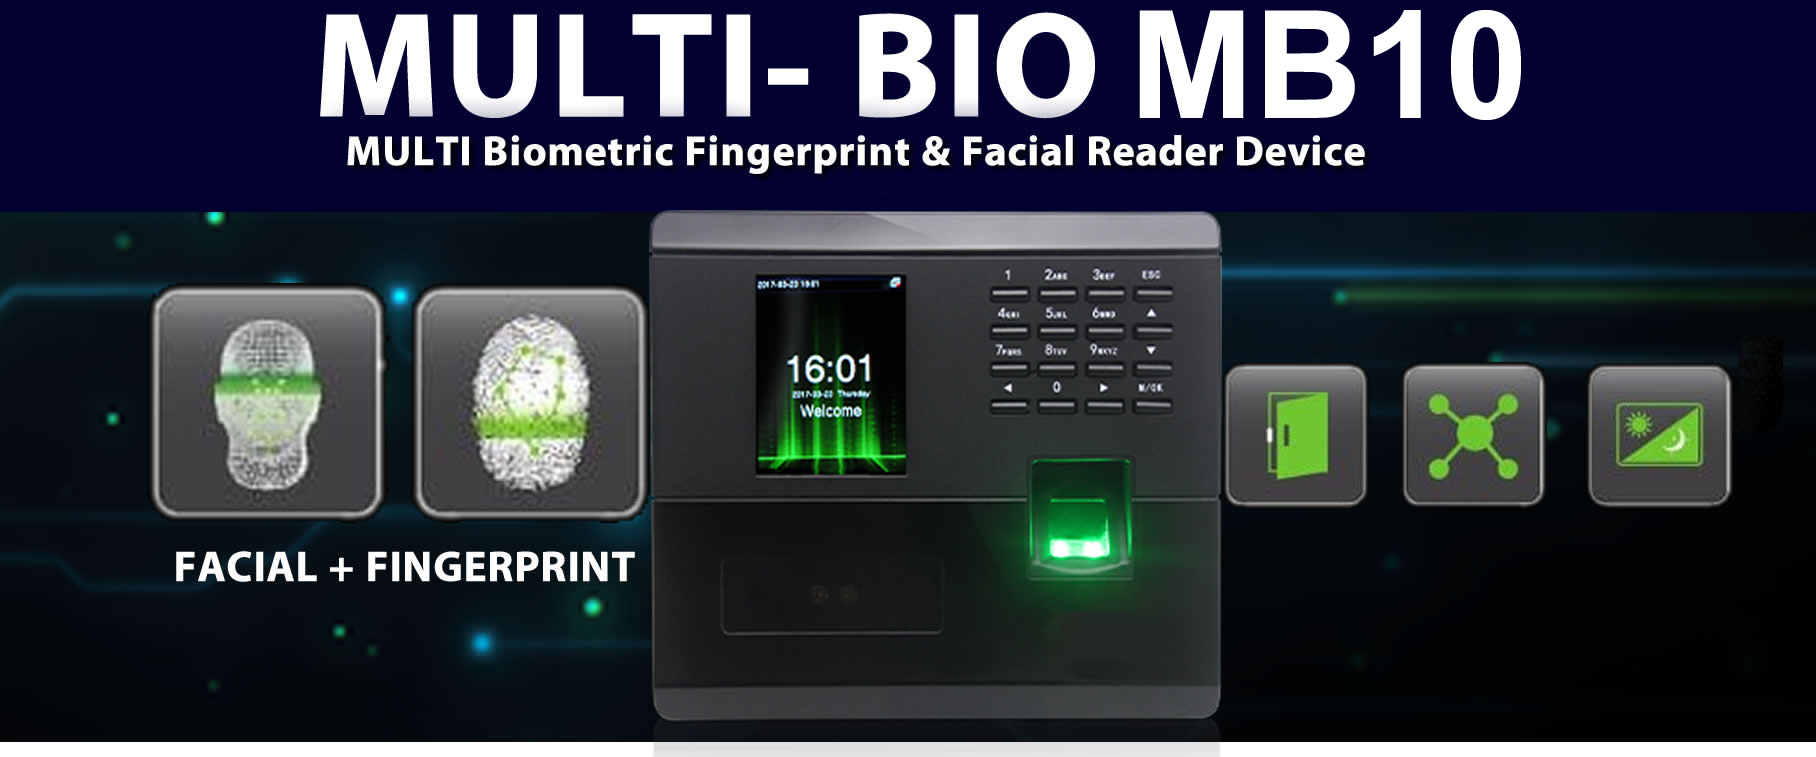 multi biometric Fingerprint reader device